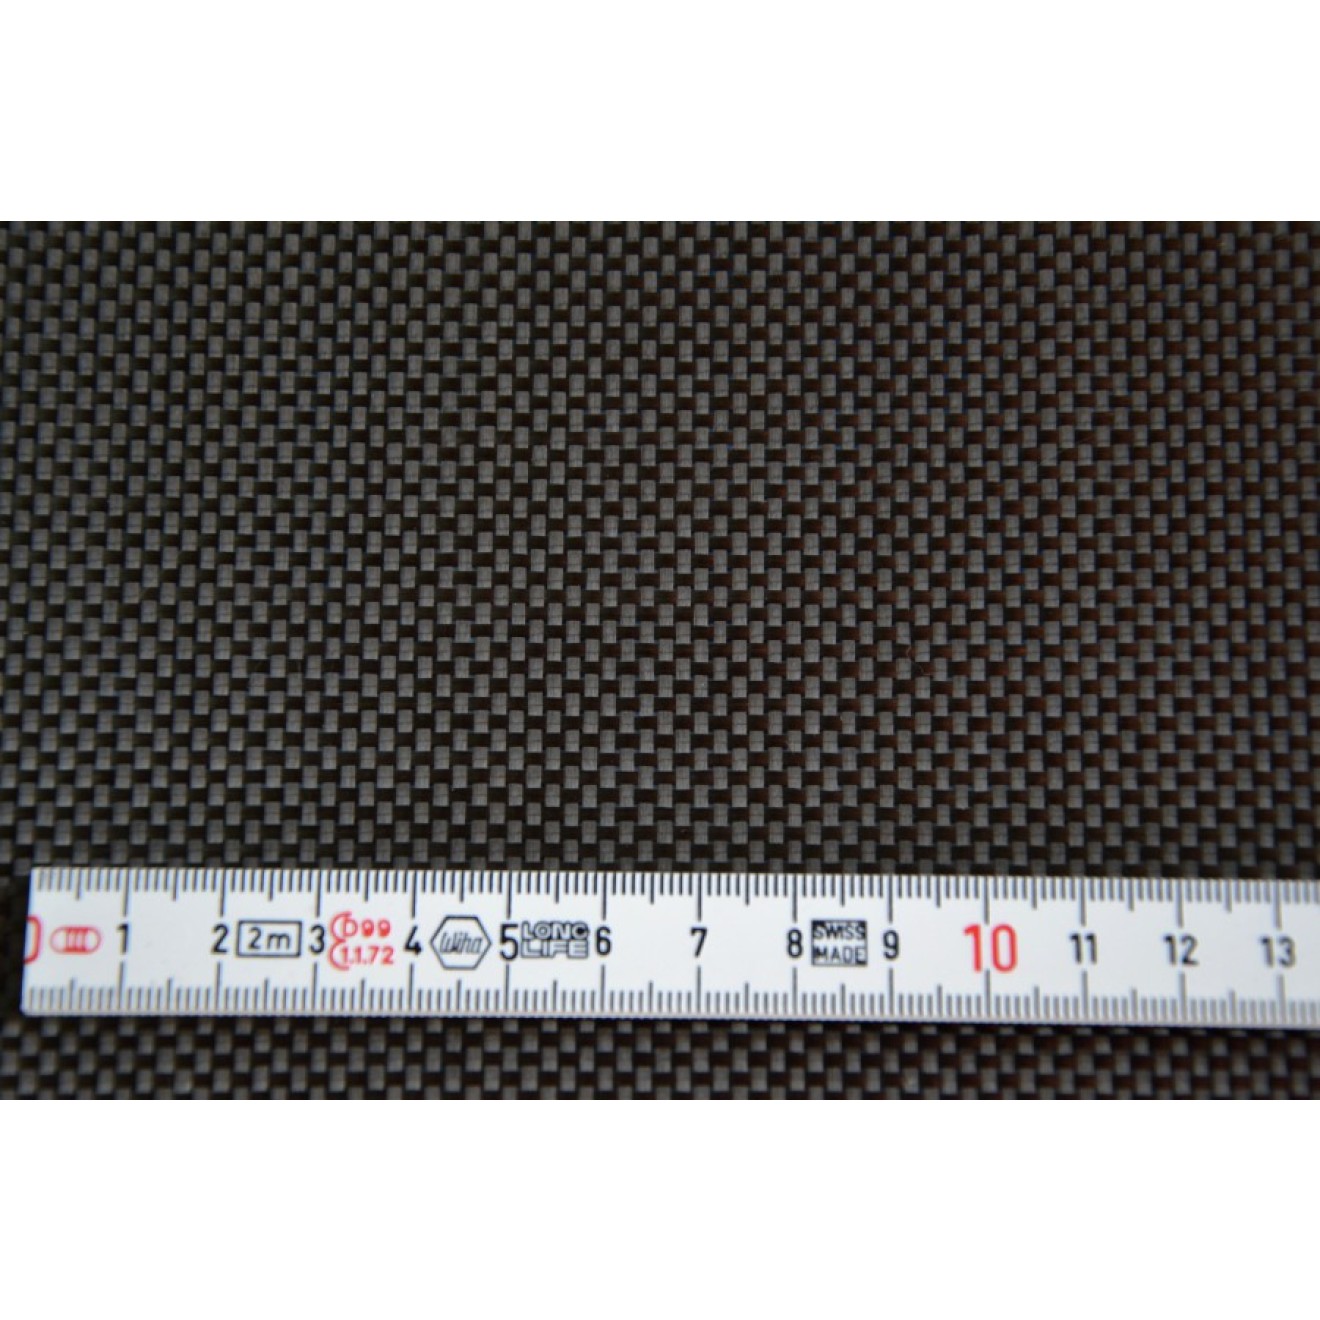 Woven carbon fiber fabric 3K 200g/m² plain weave, roll length 25m